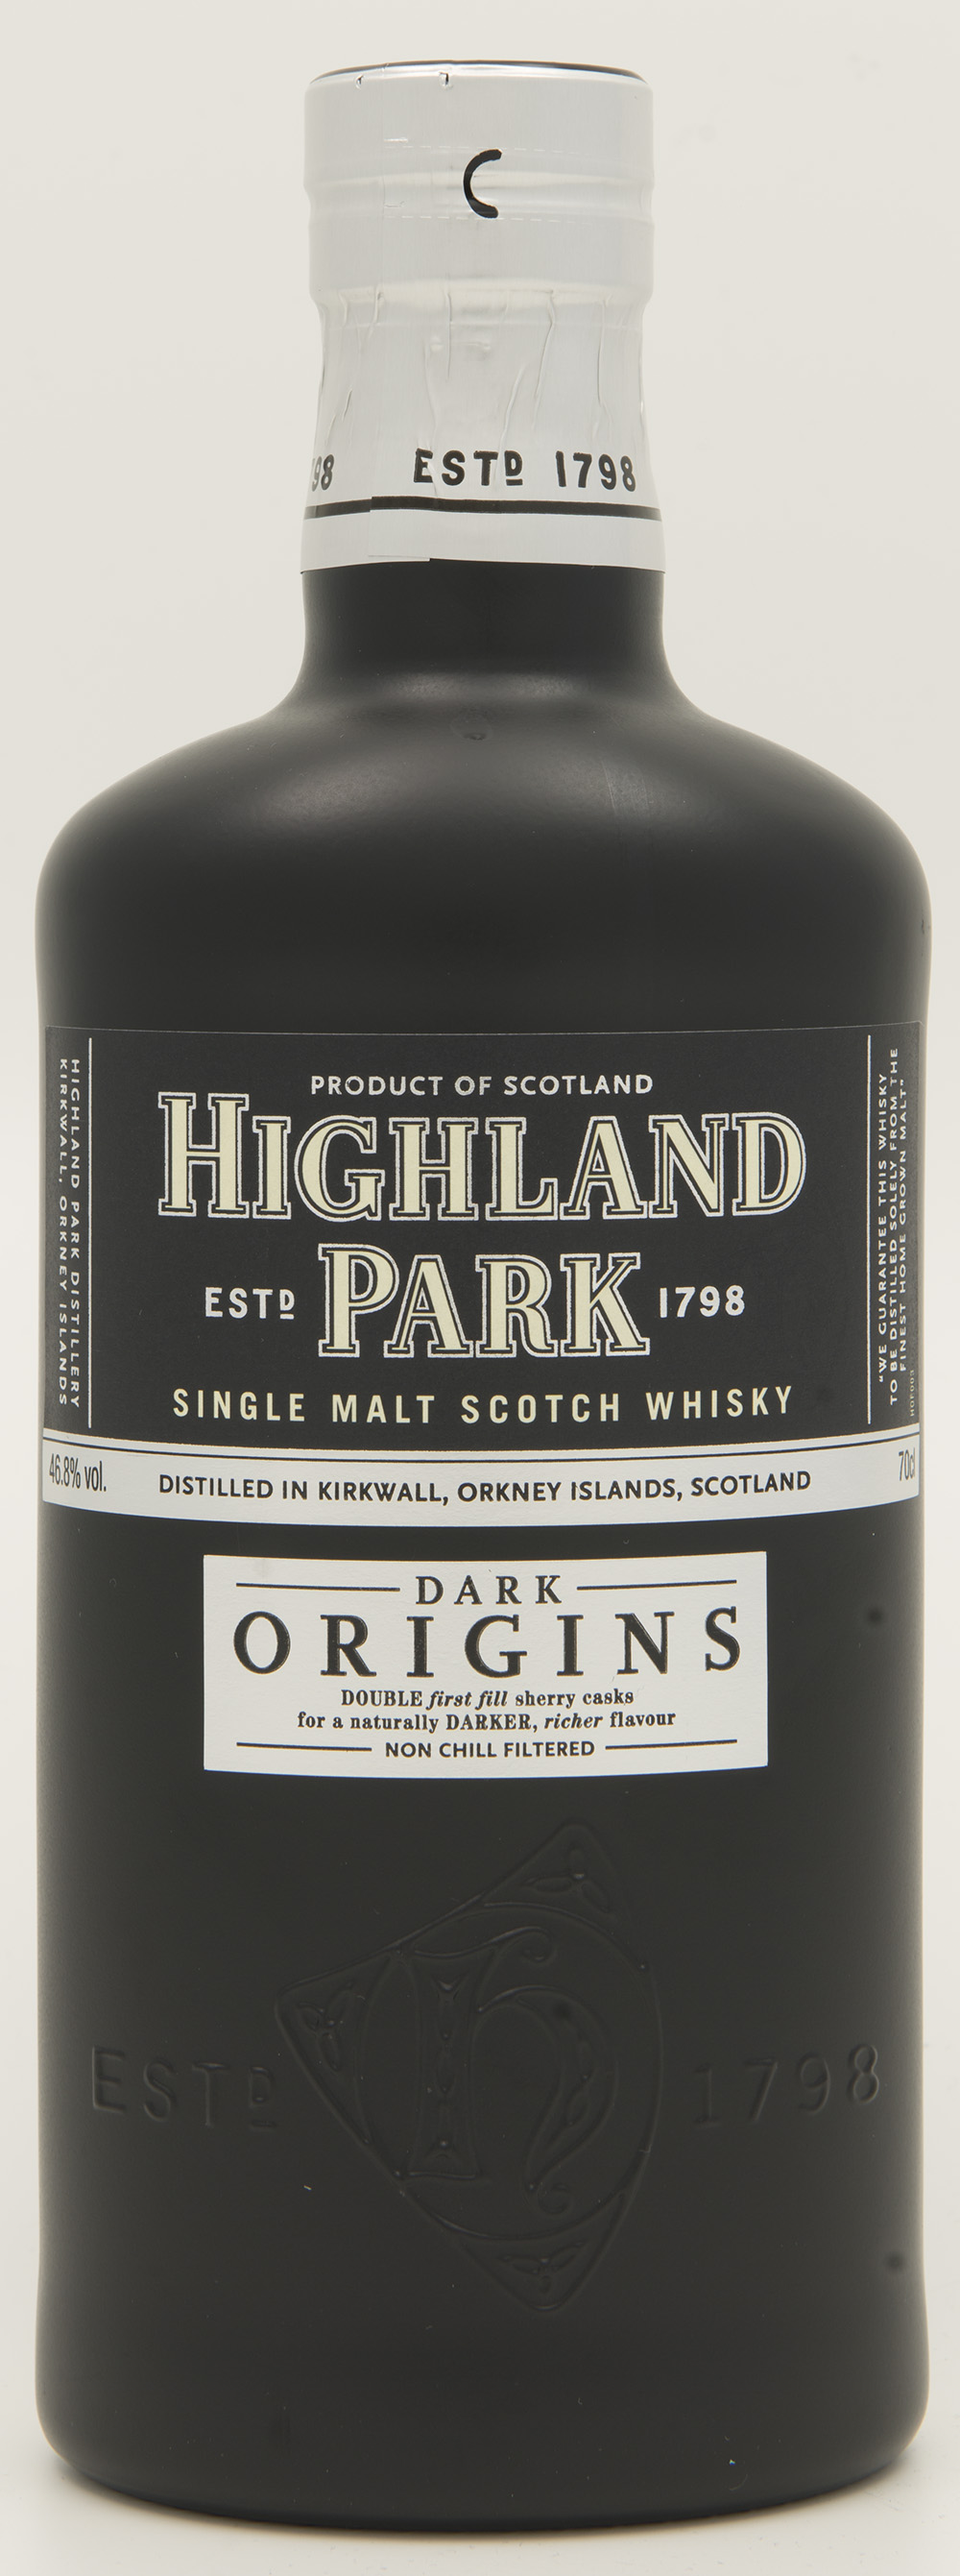 Billede: DSC_6438 Highland Park - Dark Origins - bottle front.jpg